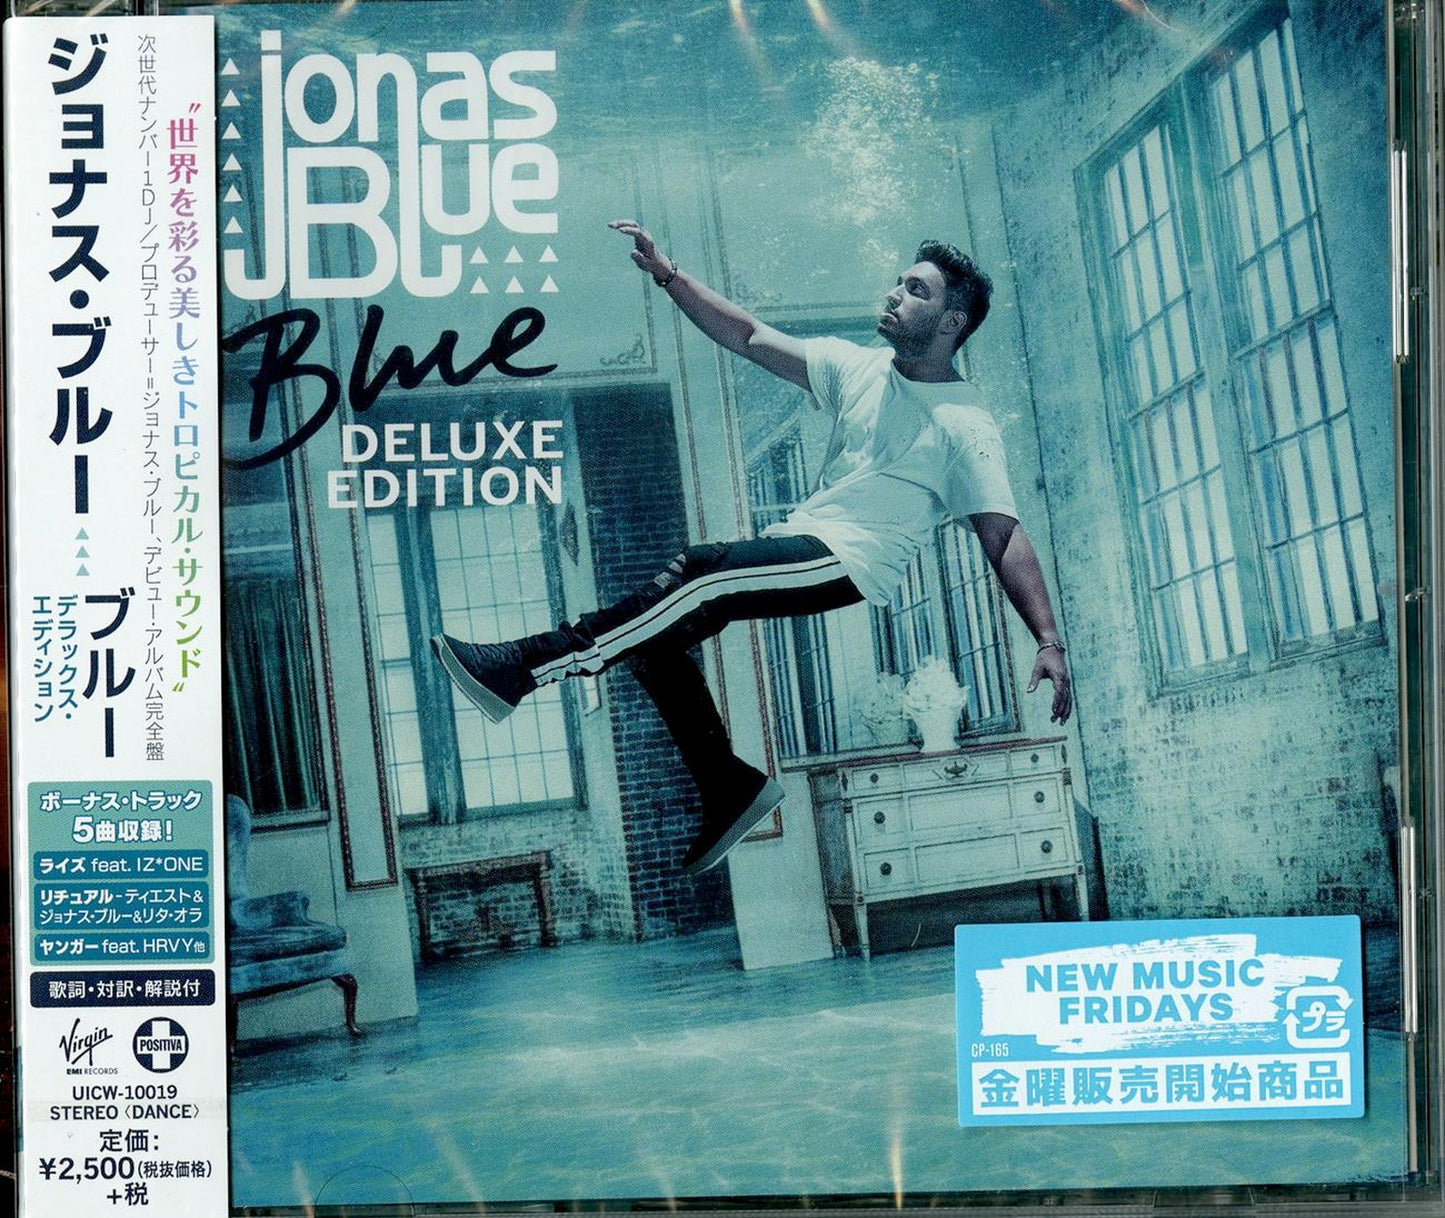 Jonas Blue - Perfect Strangers (Acoustic Video) 